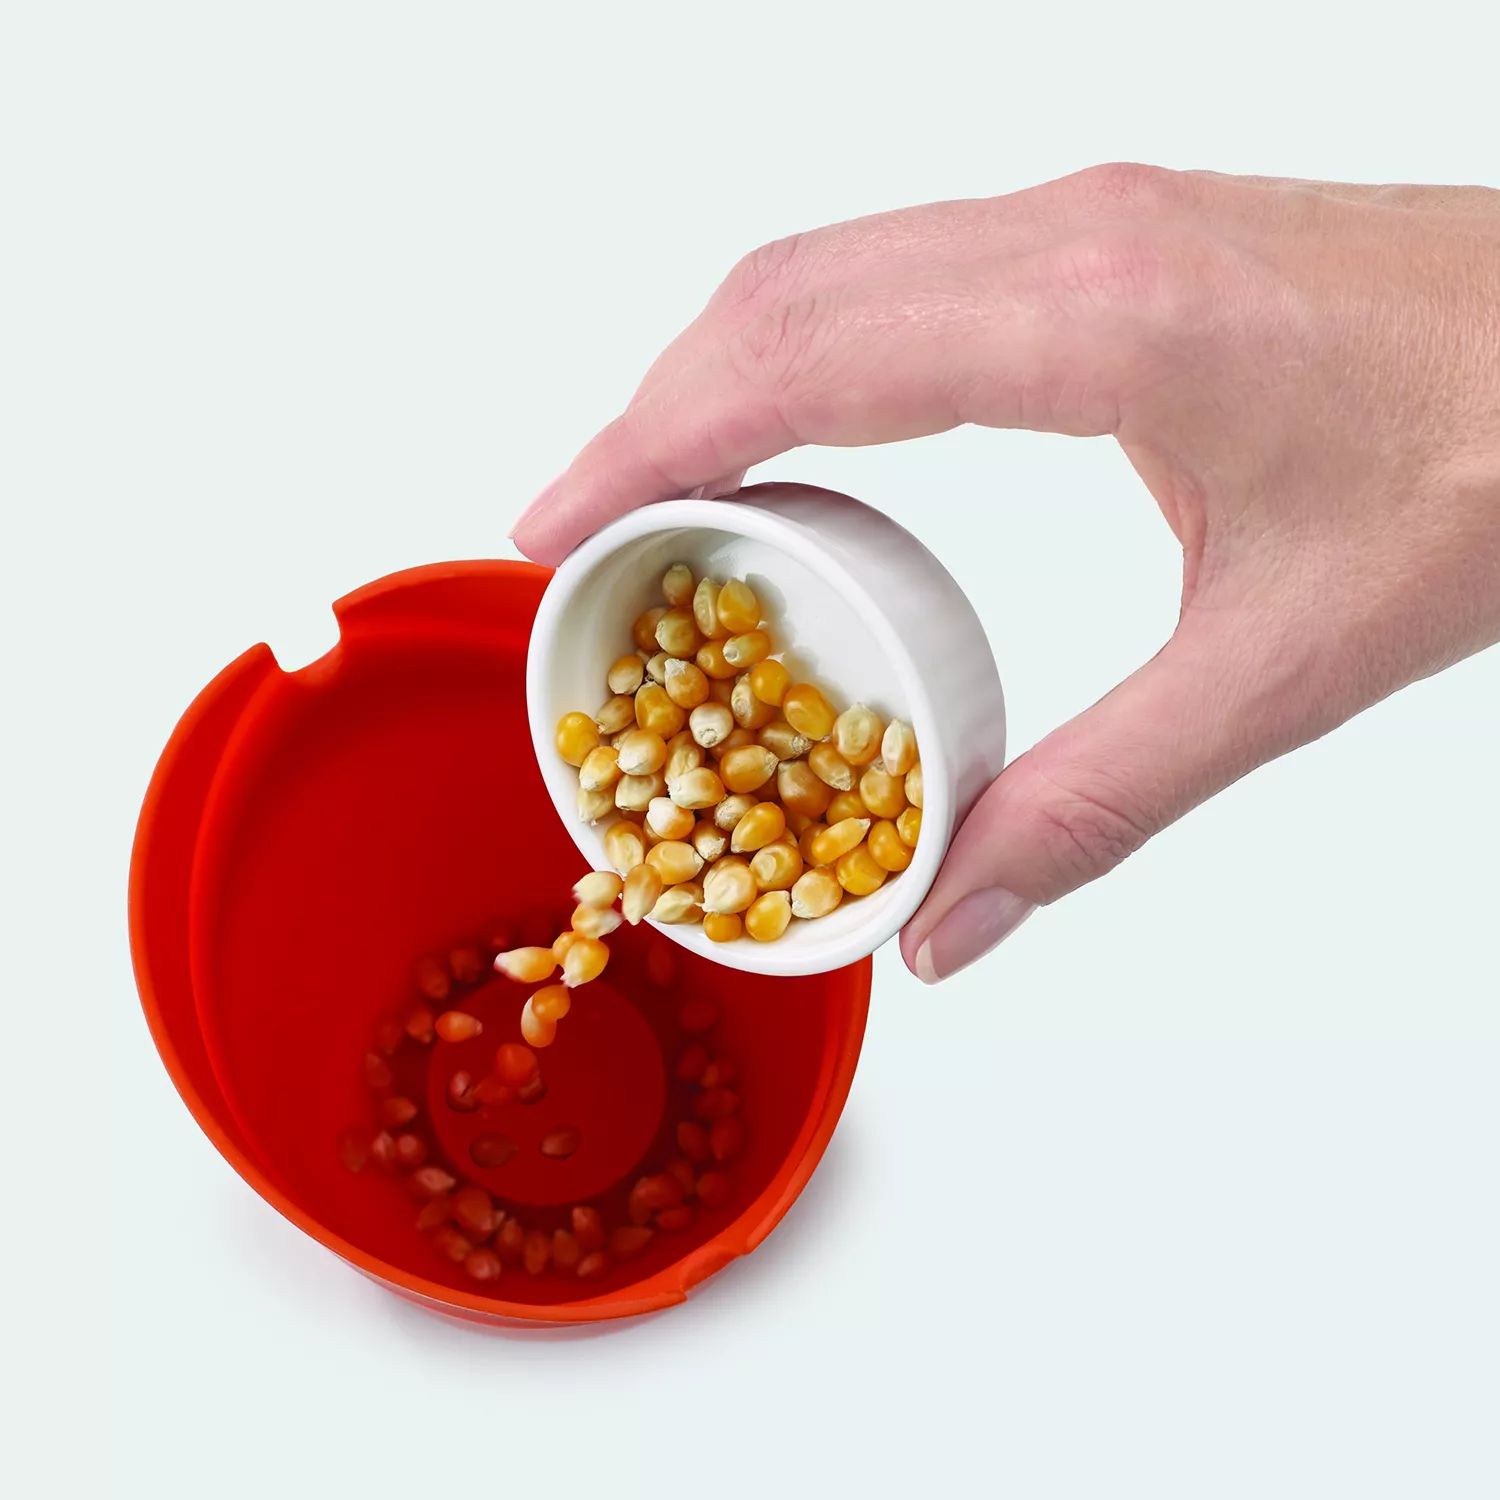 Joseph Joseph M-Cuisine Microwave Single-Serve Popcorn Maker, Set